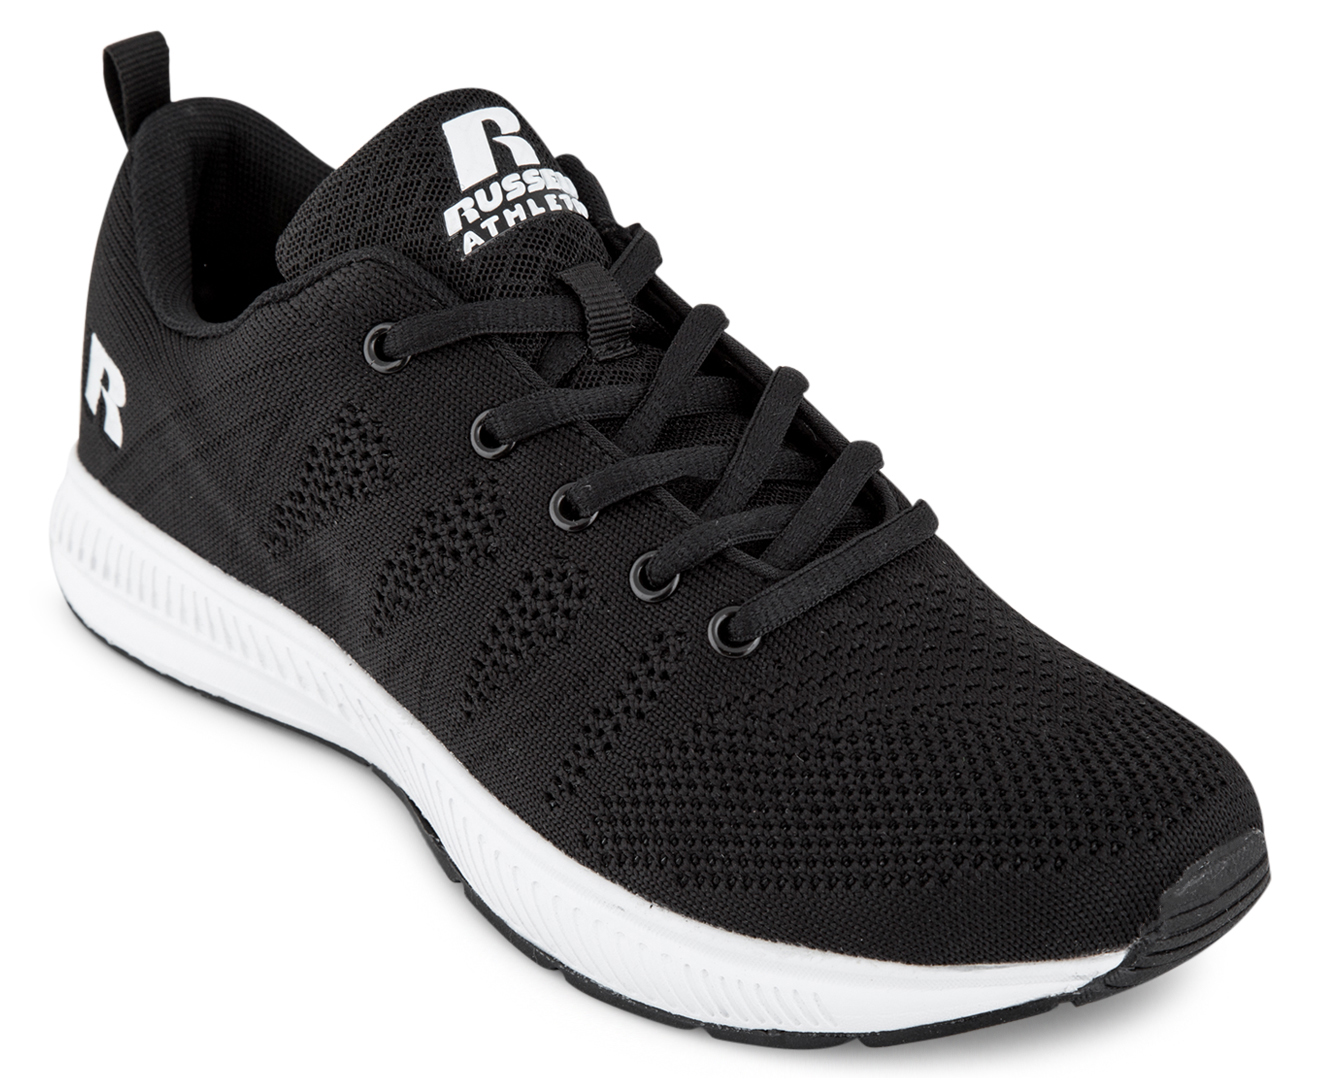 Russell Athletic Women's Magni Training Shoe - Black/White | Catch.com.au